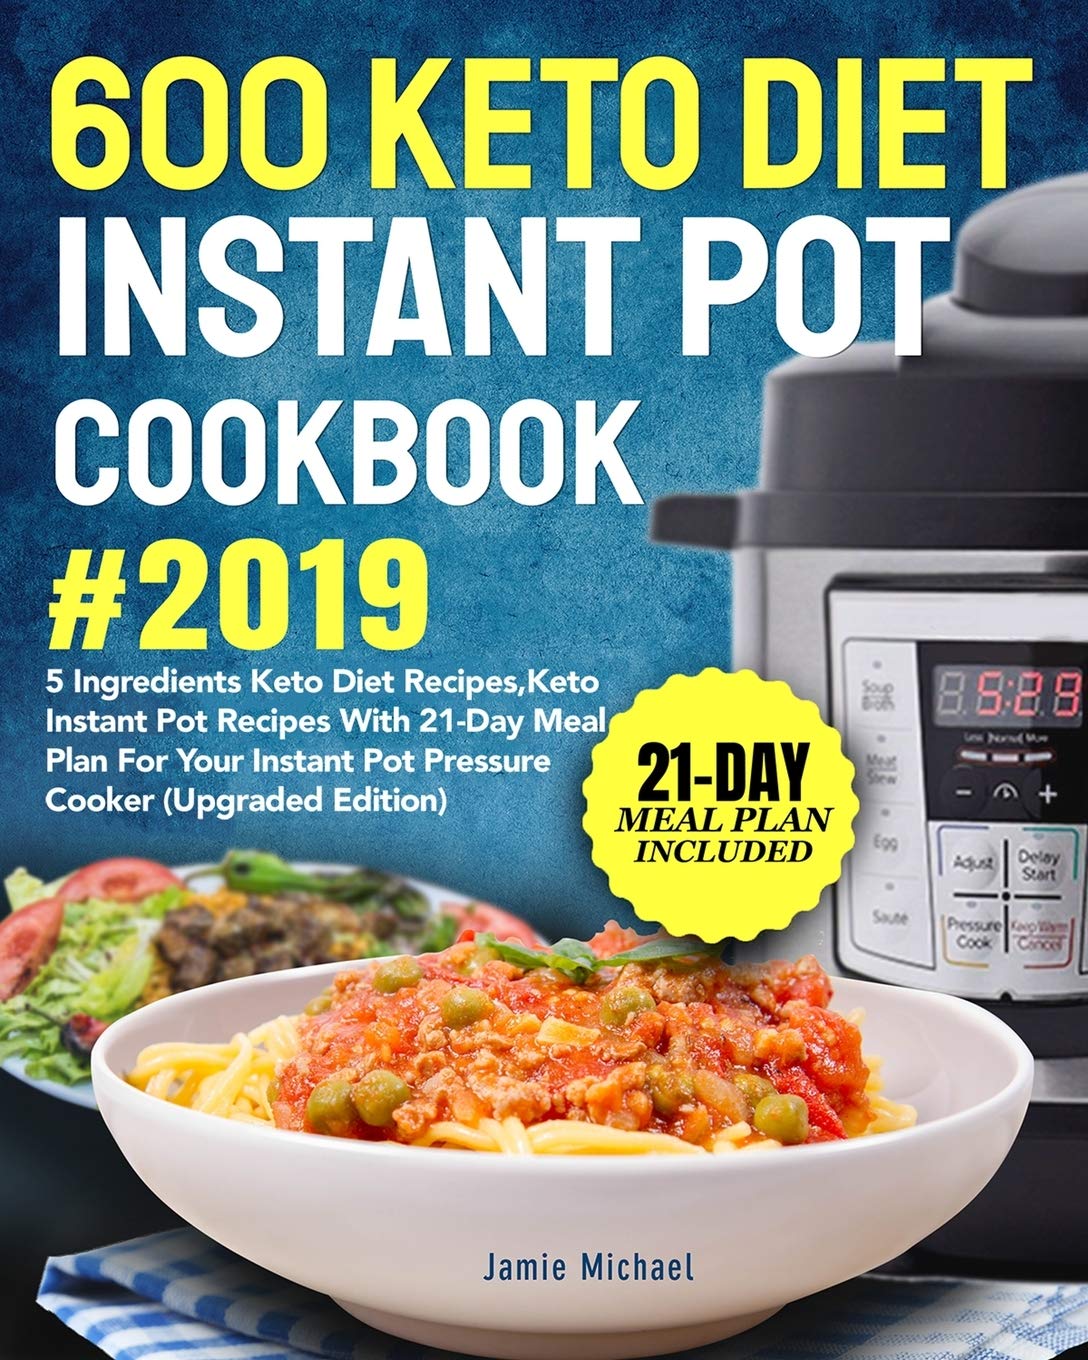 Best Instant Pot Cookbooks for Keto in 2020